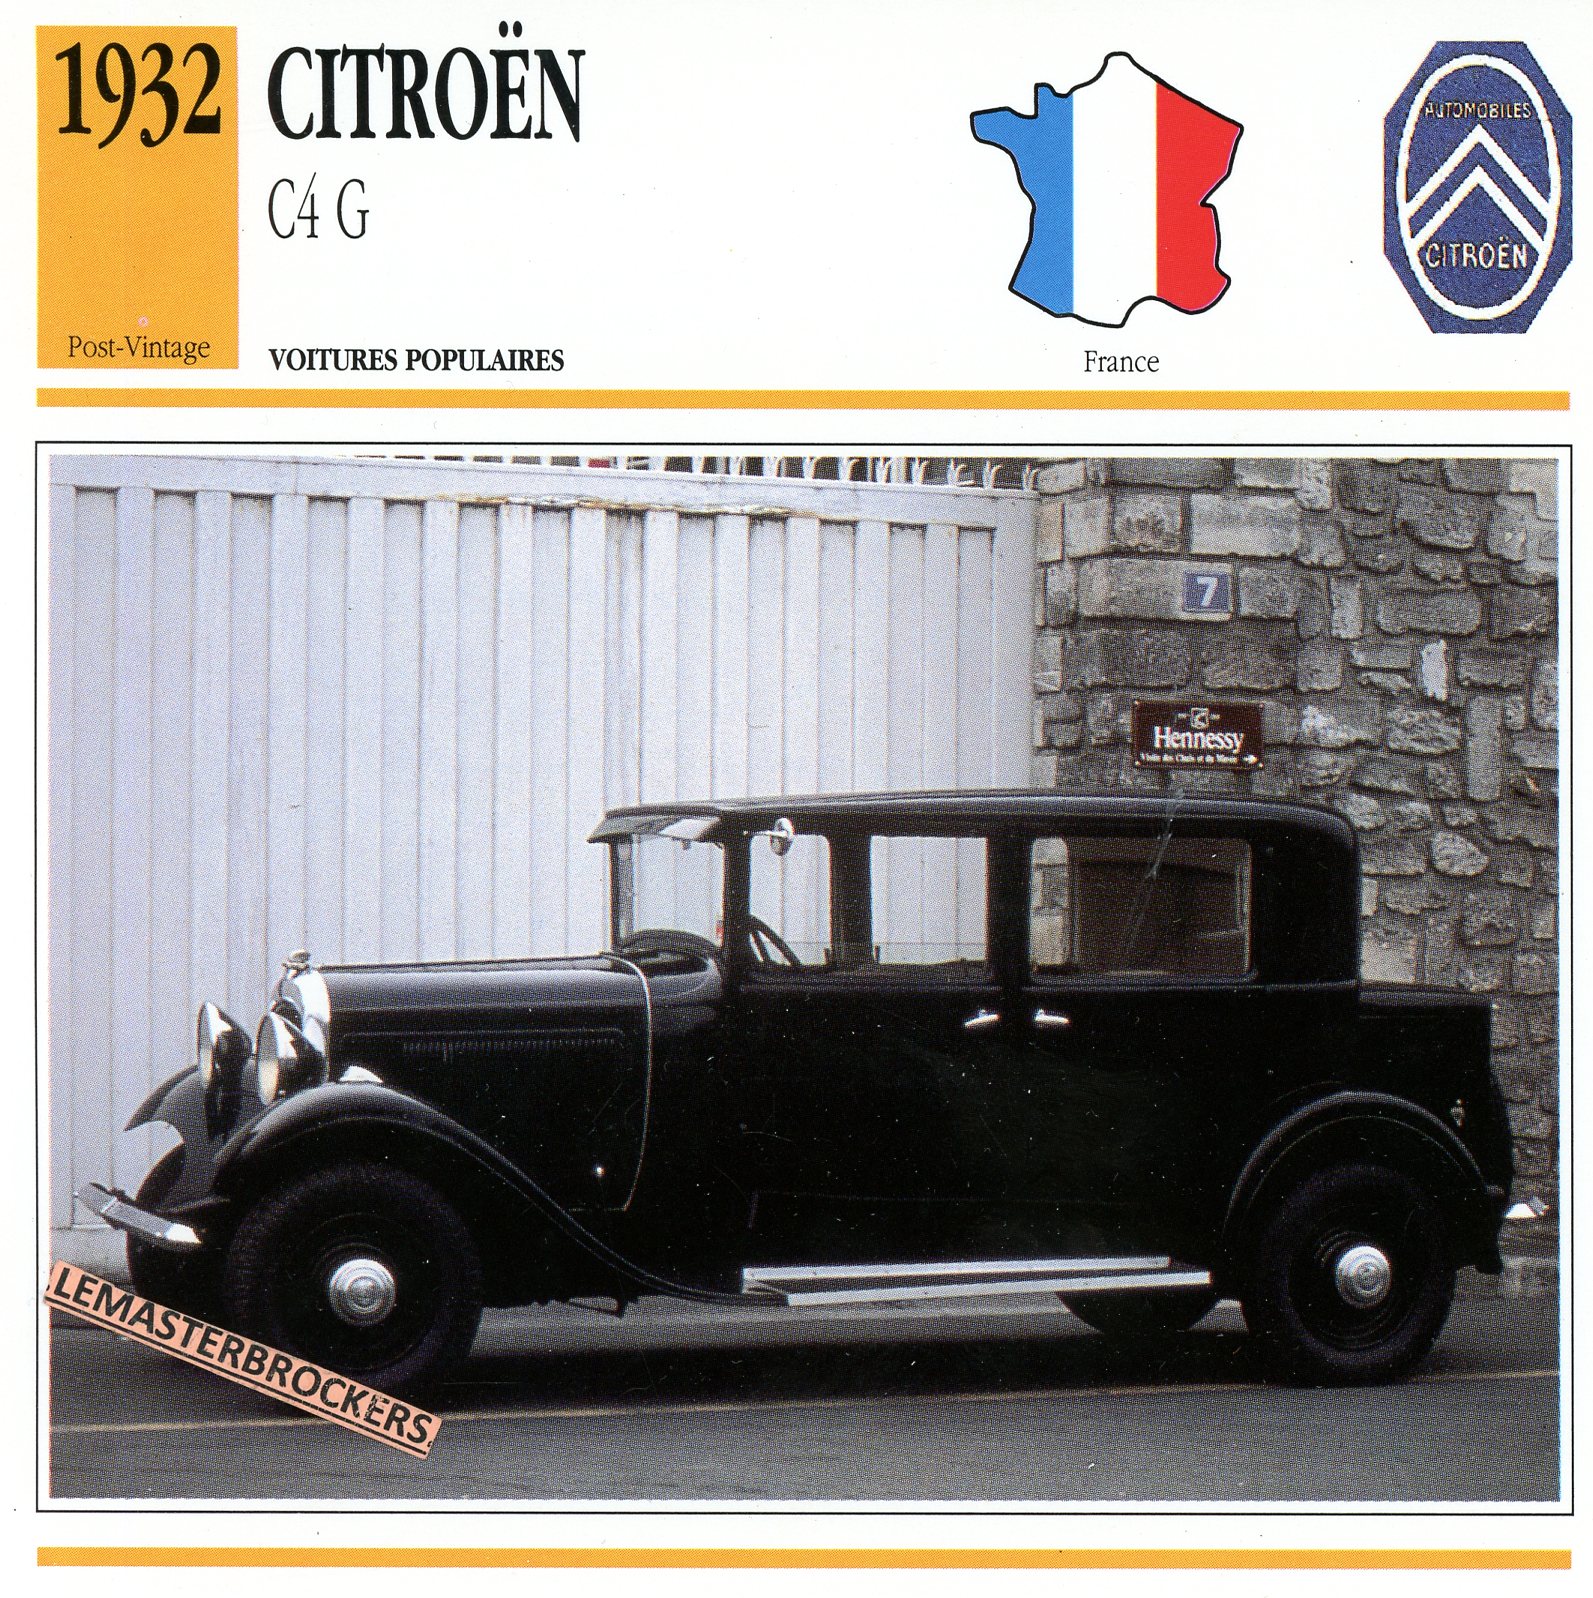 FICHE-CITROËN-C4-G-1932-CARD-CARS-LEMASTERBROCKERS